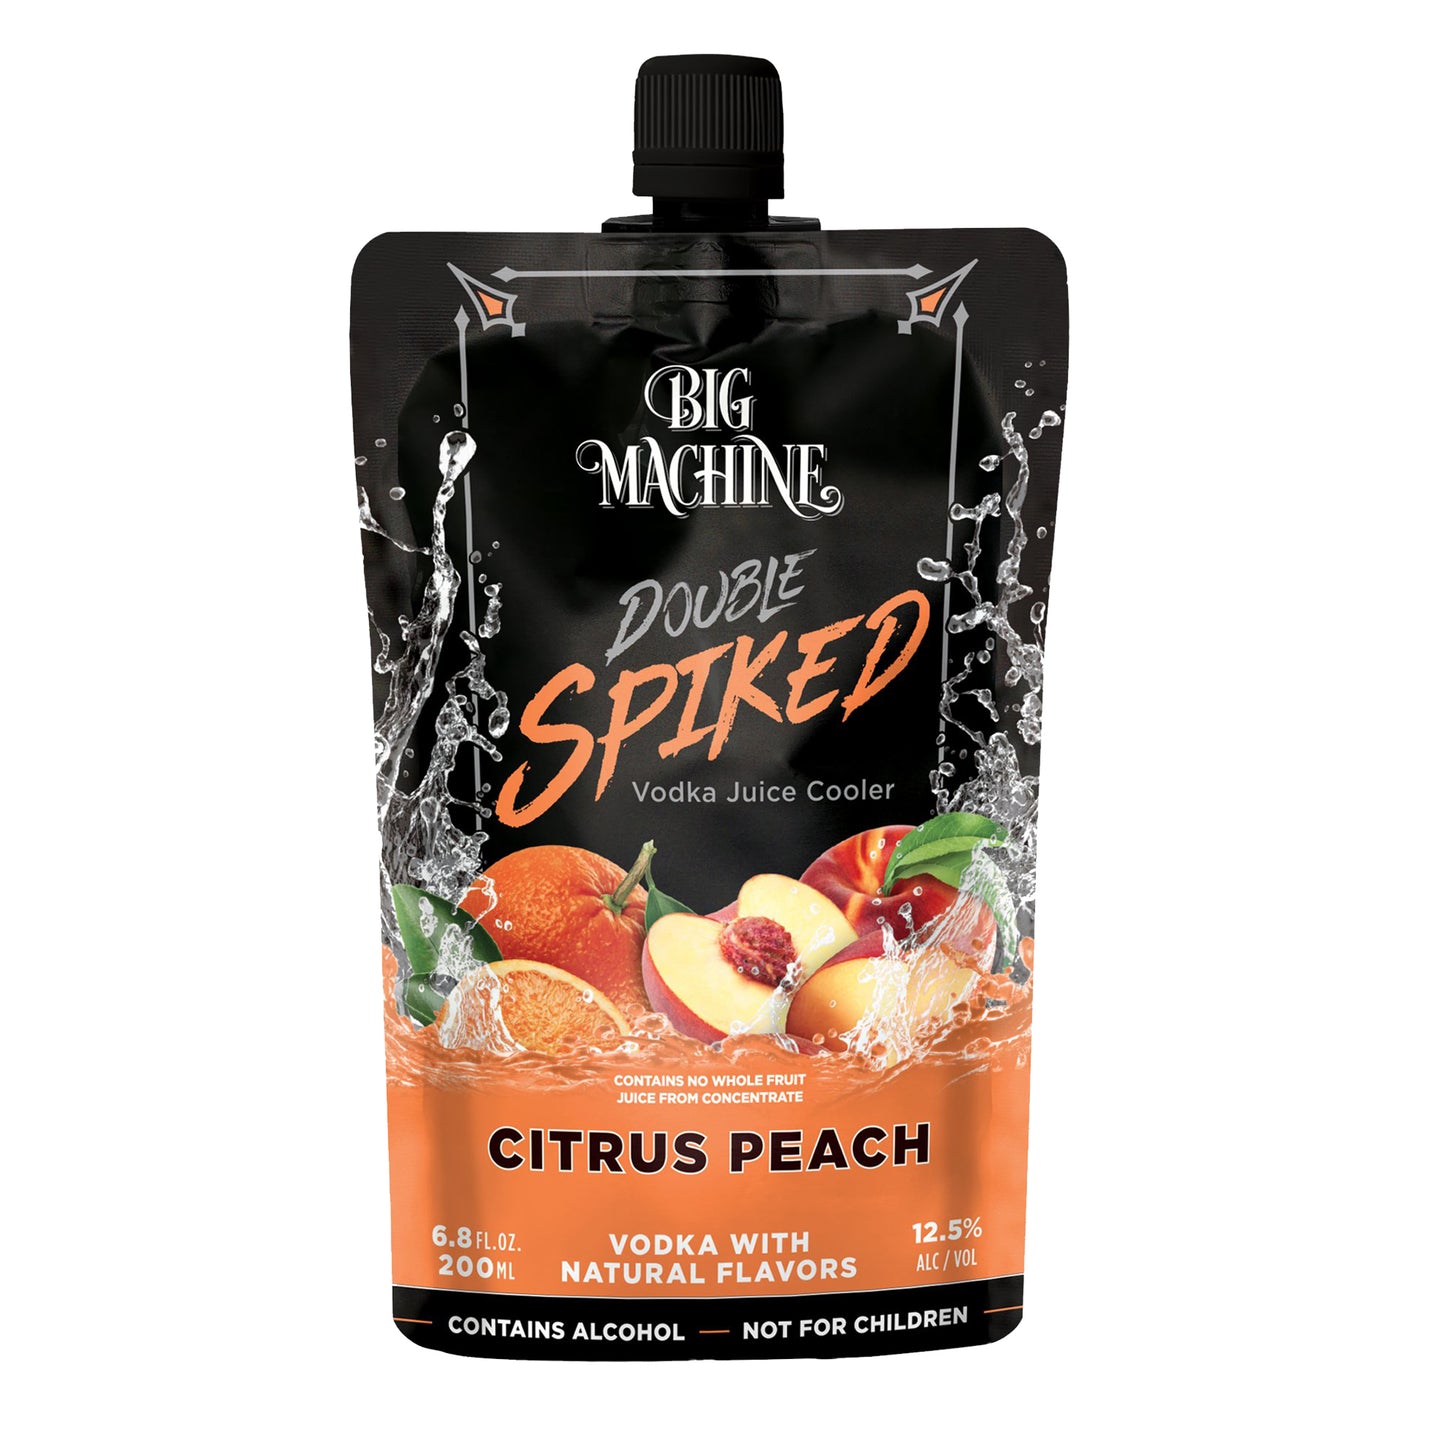 Double Spiked Vodka Juice Cooler Citrus Peach - 24 Pack